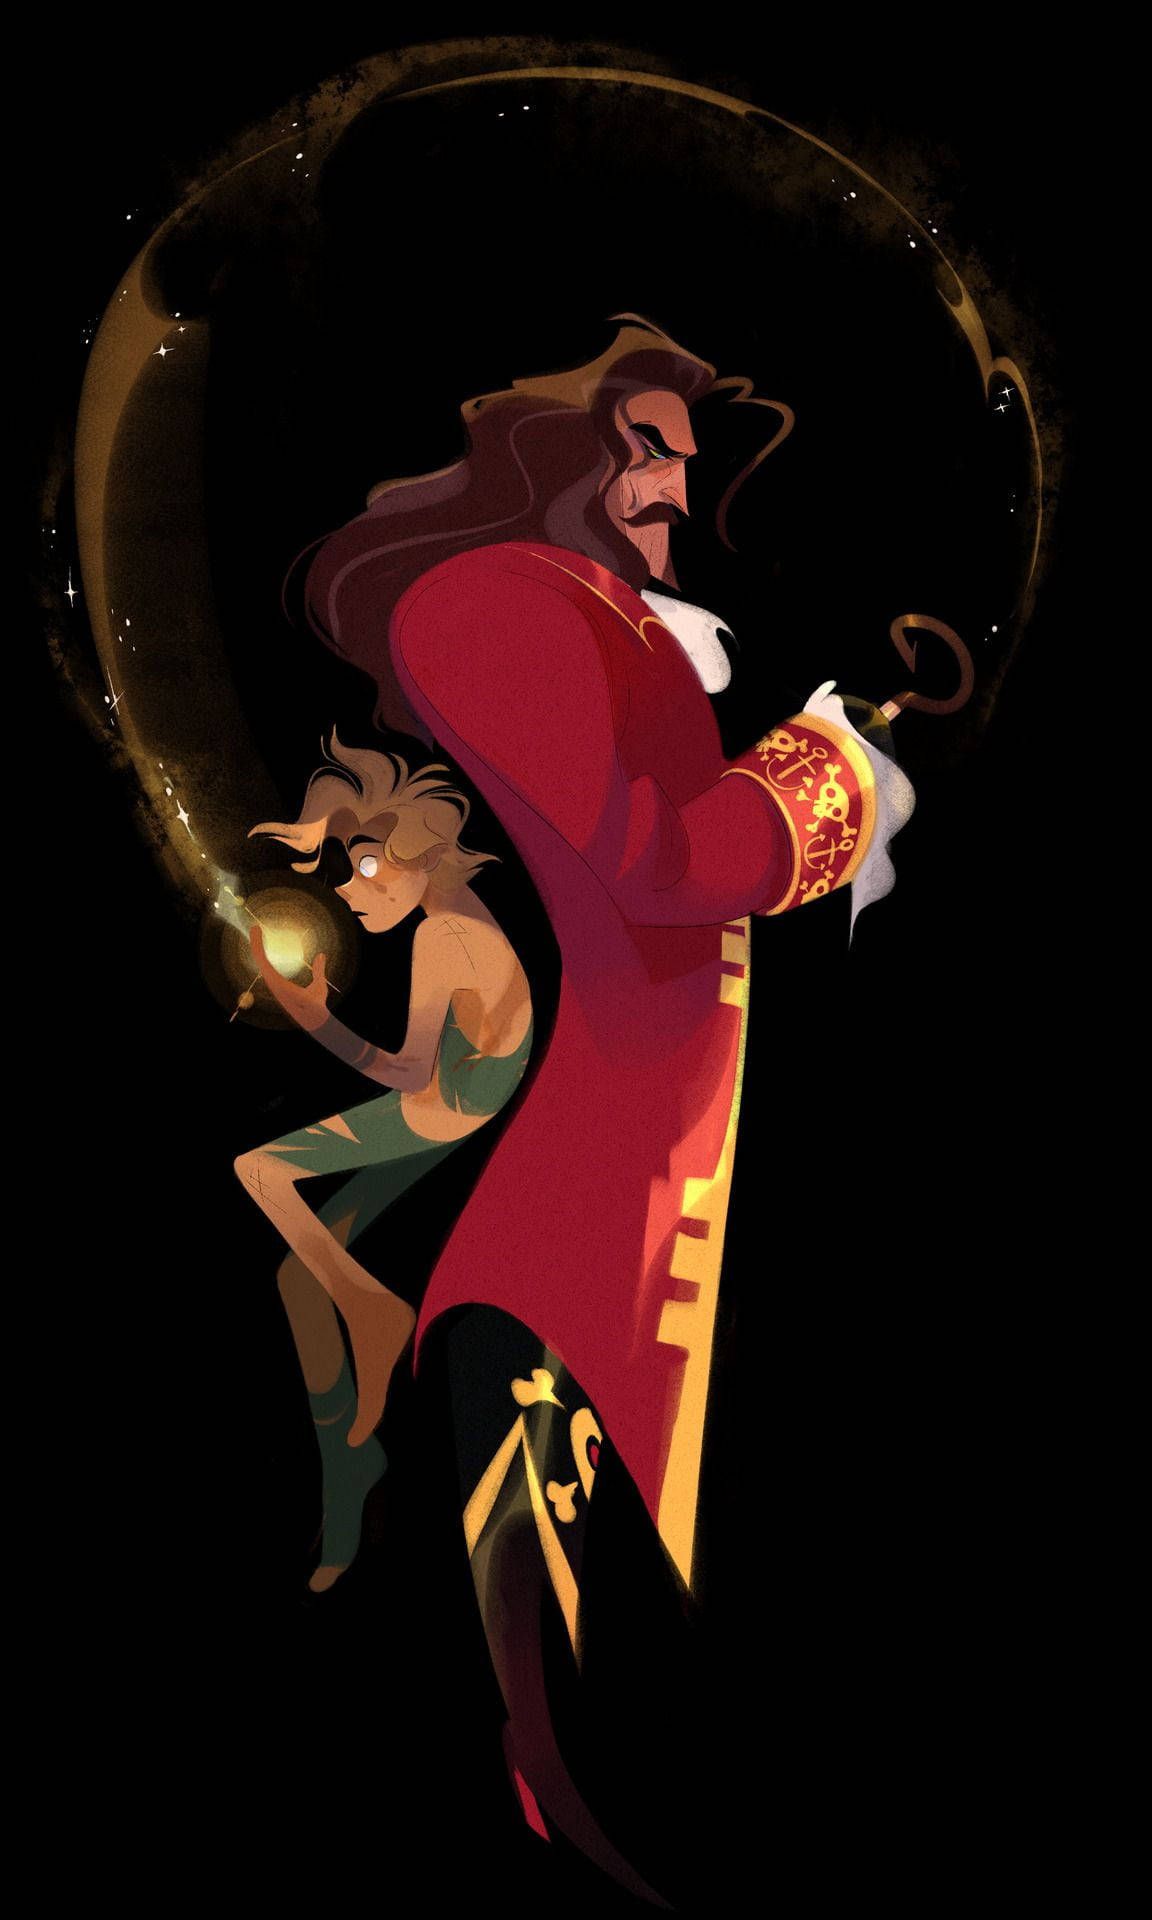 Download free Peter Pan Captain Hook Illustration Wallpaper